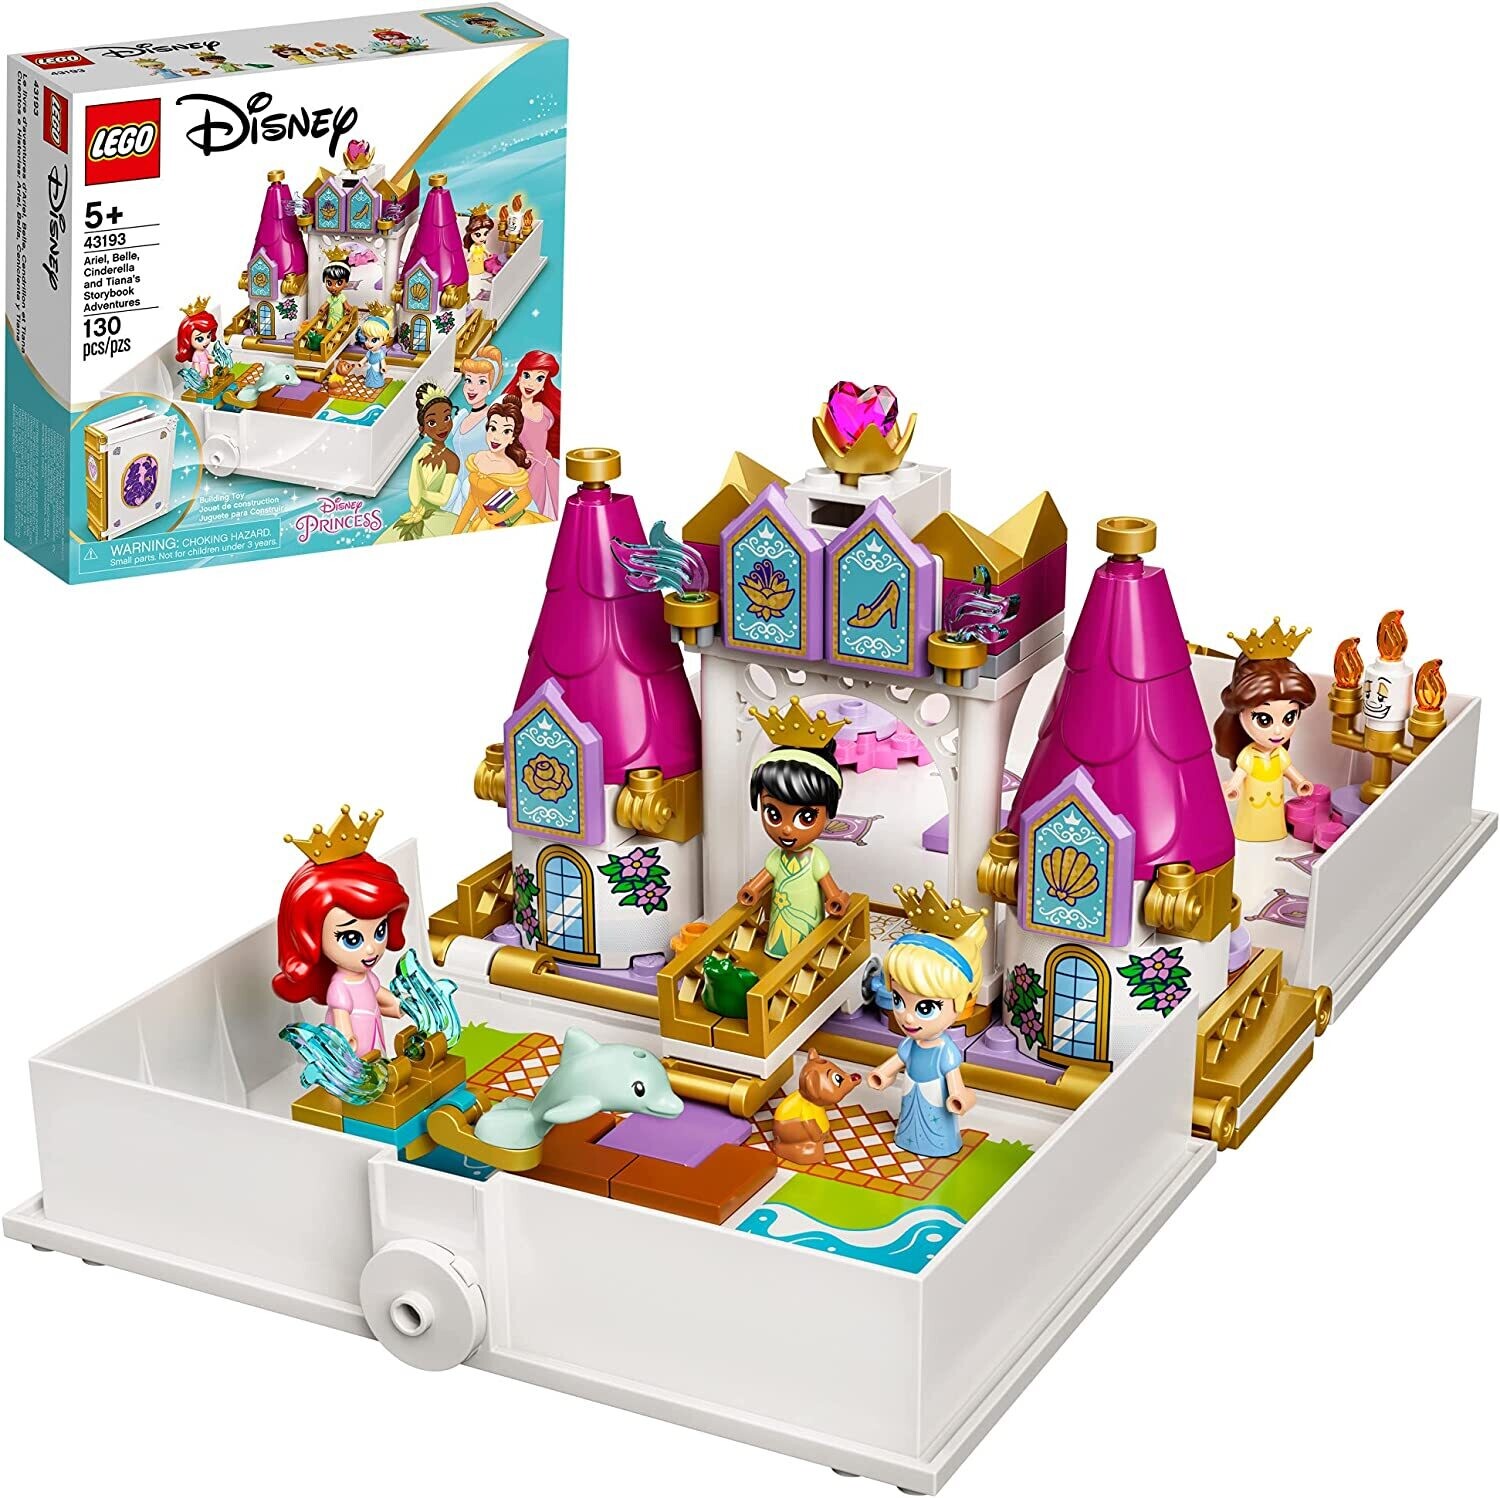 LEGO 43193 Ariel, Belle, Cinderella and Tiana's Storybook Adventures